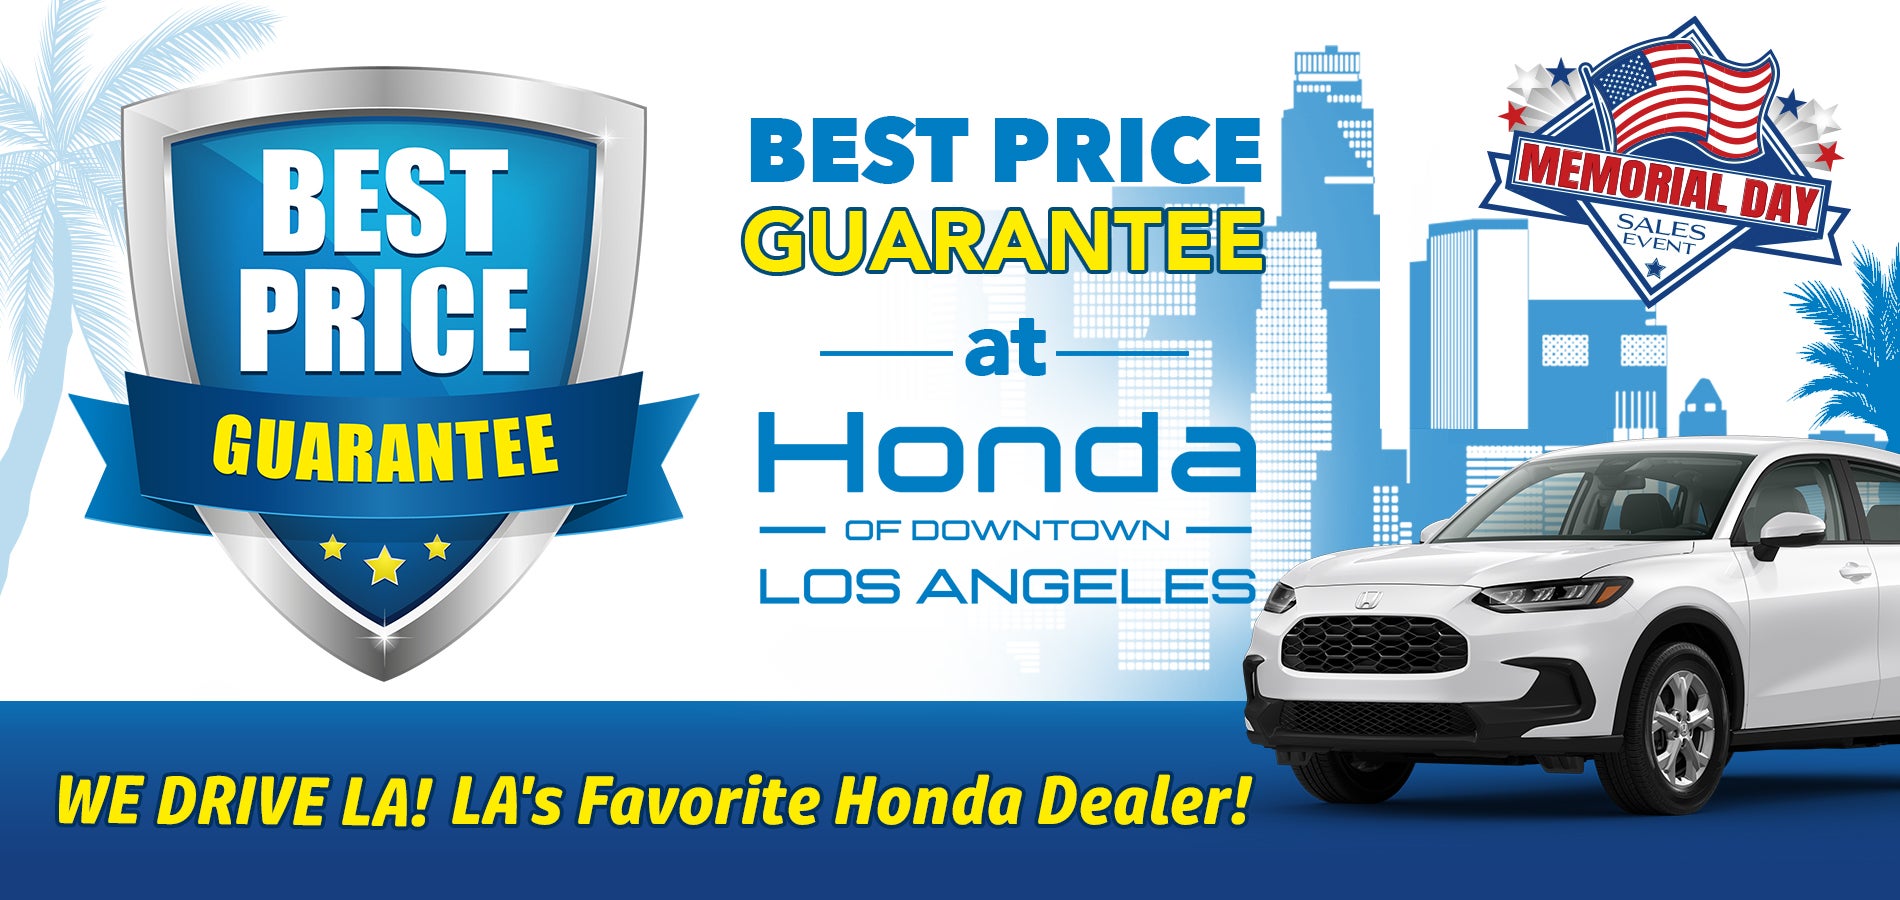 Best Price Guarantee at Honda DTLA!